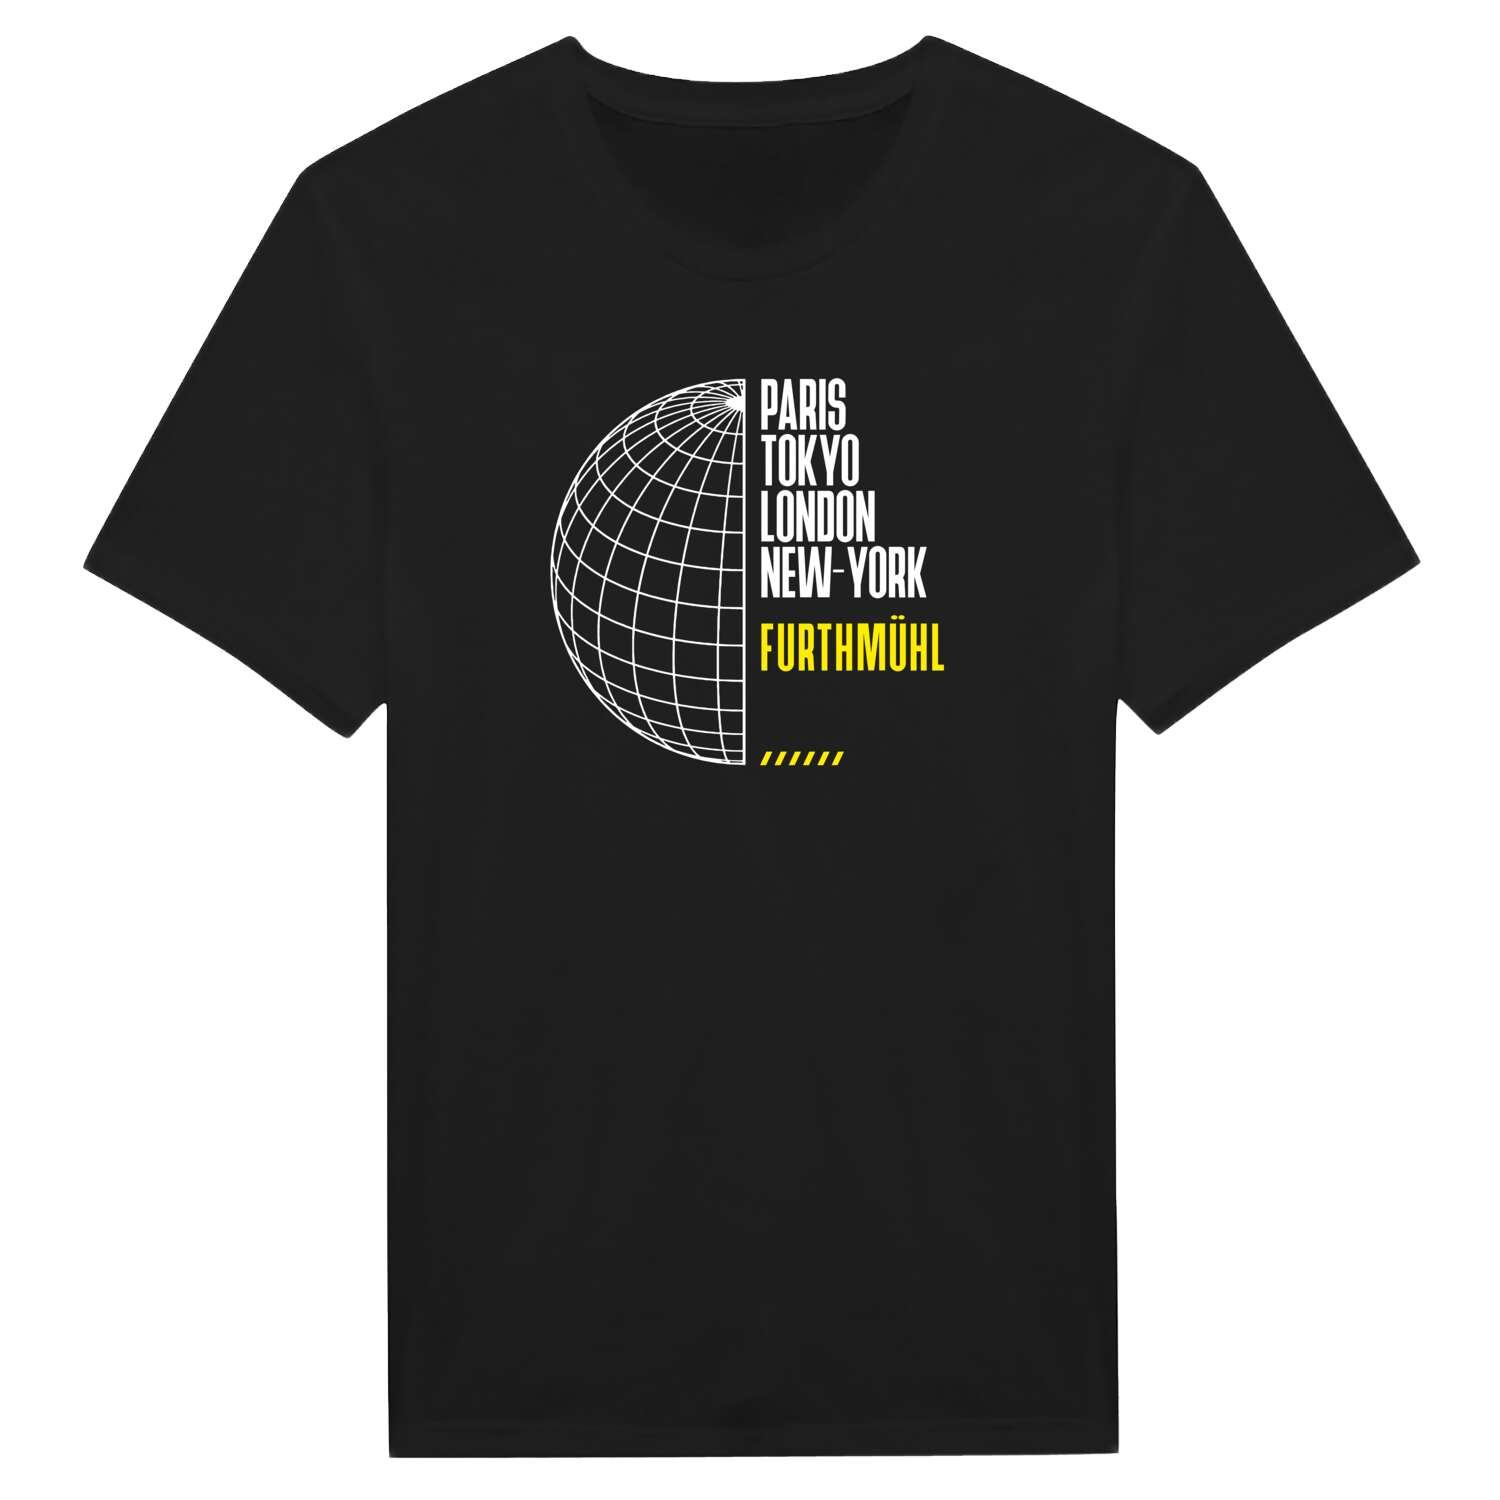 Furthmühl T-Shirt »Paris Tokyo London«